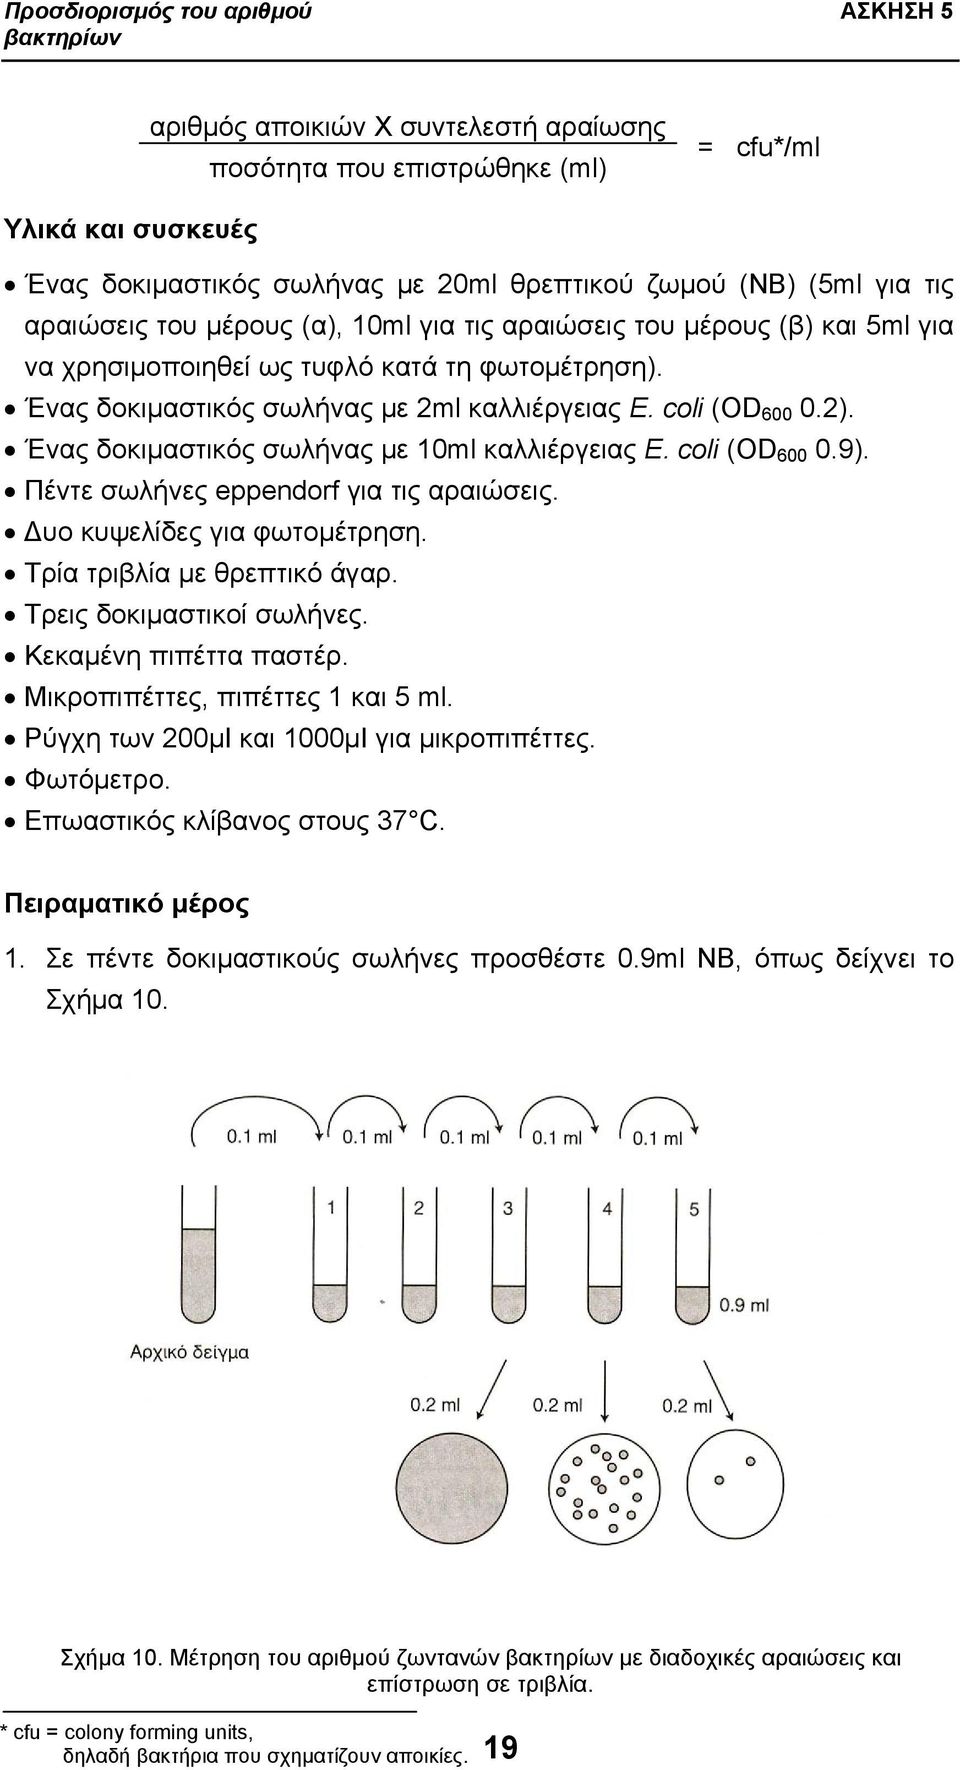 coli (OD 600 0.2). Ένας δοκιμαστικός σωλήνας με 10ml καλλιέργειας Ε. coli (OD 600 0.9). Πέντε σωλήνες eppendorf για τις αραιώσεις. υο κυψελίδες για φωτομέτρηση. Τρία τριβλία με θρεπτικό άγαρ.